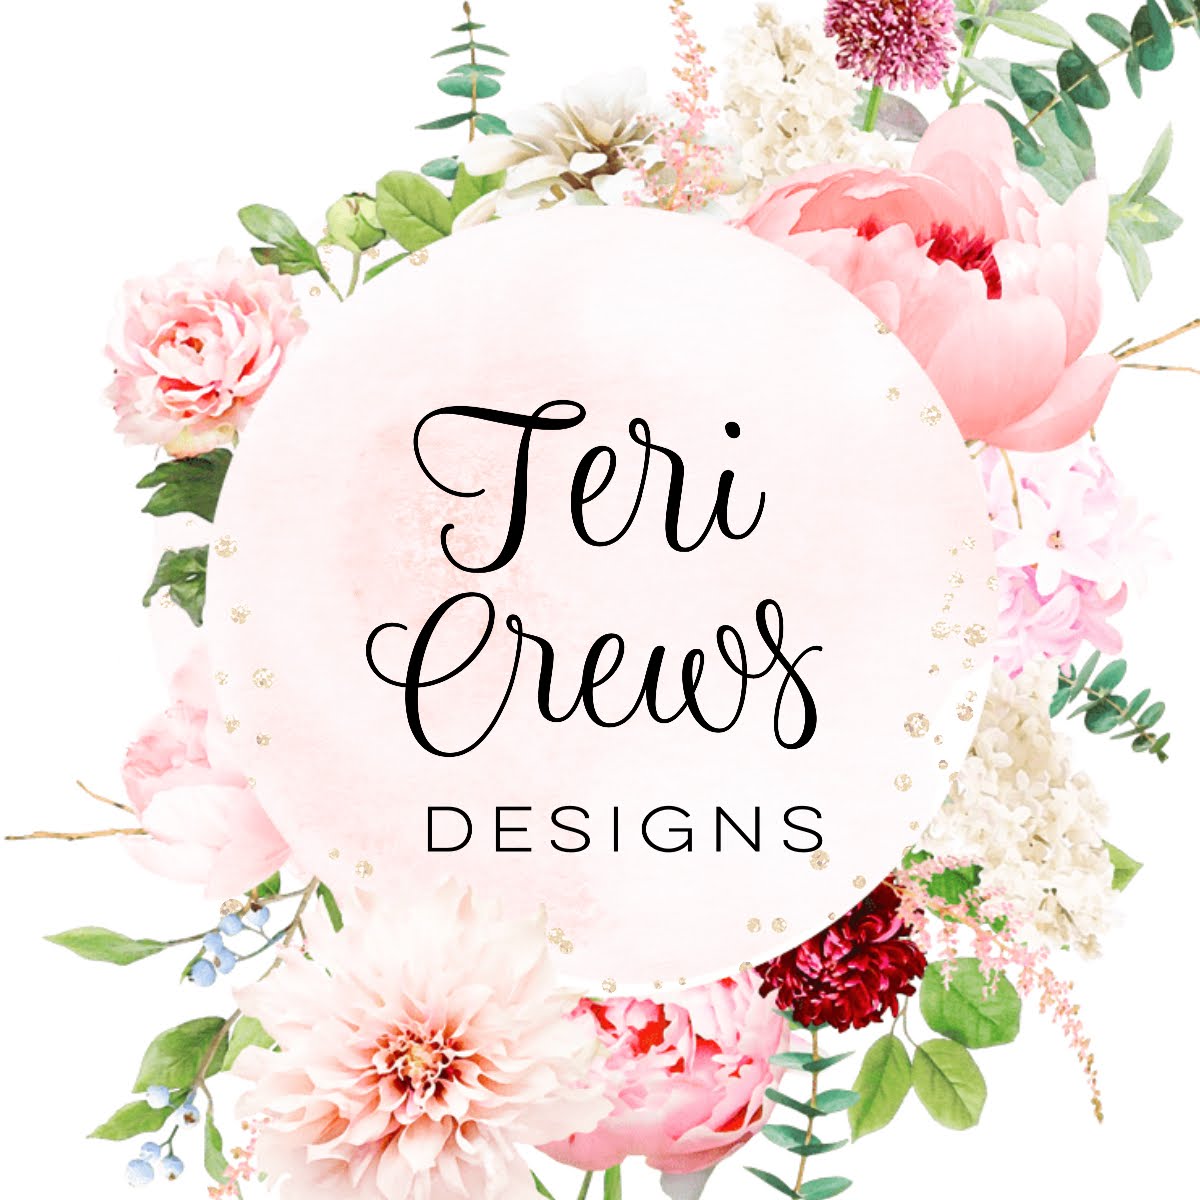 Teri Crews Designs Website